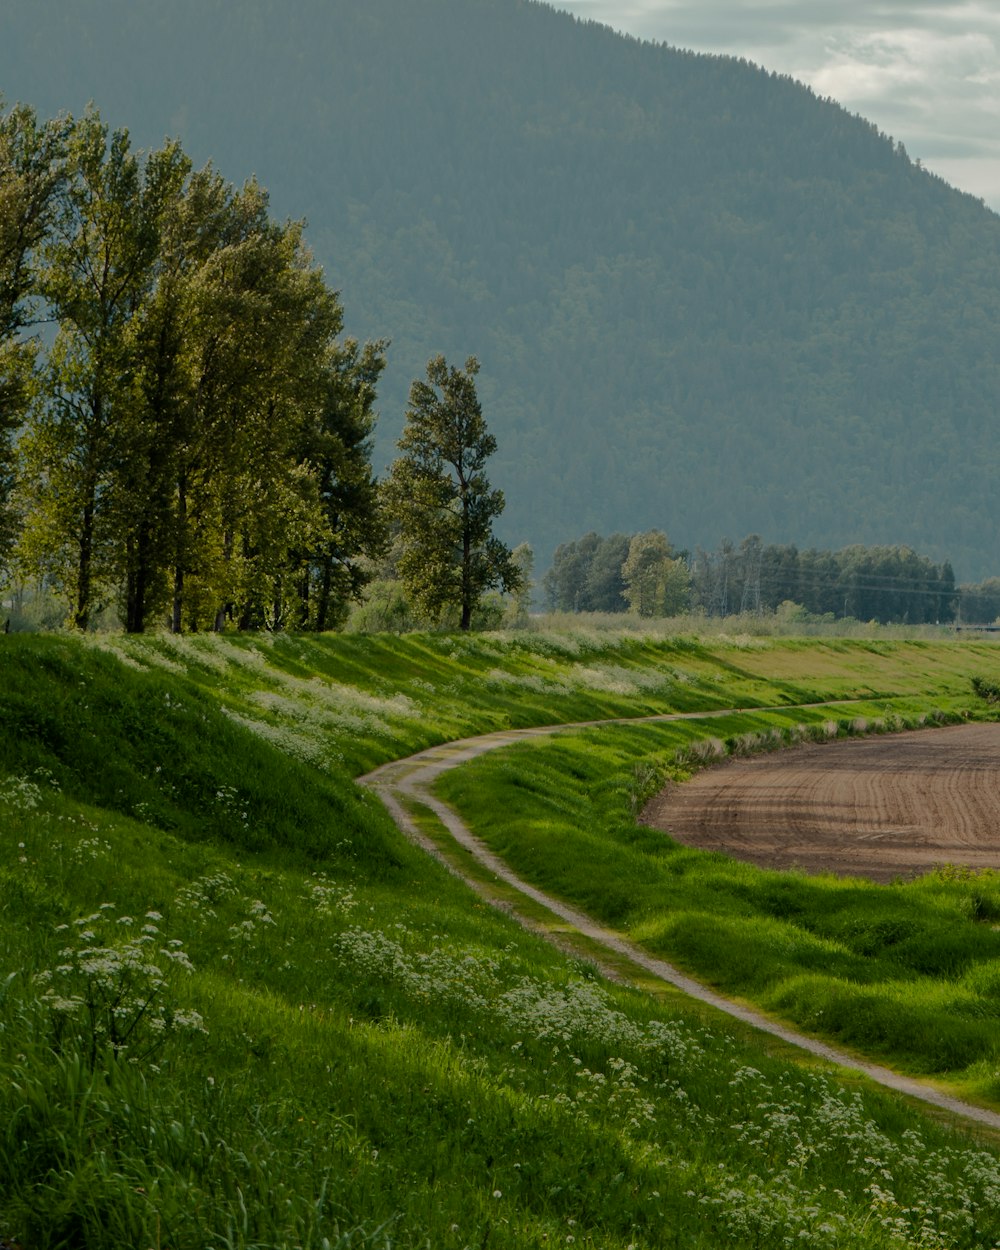 a dirt road winding through a lush green field